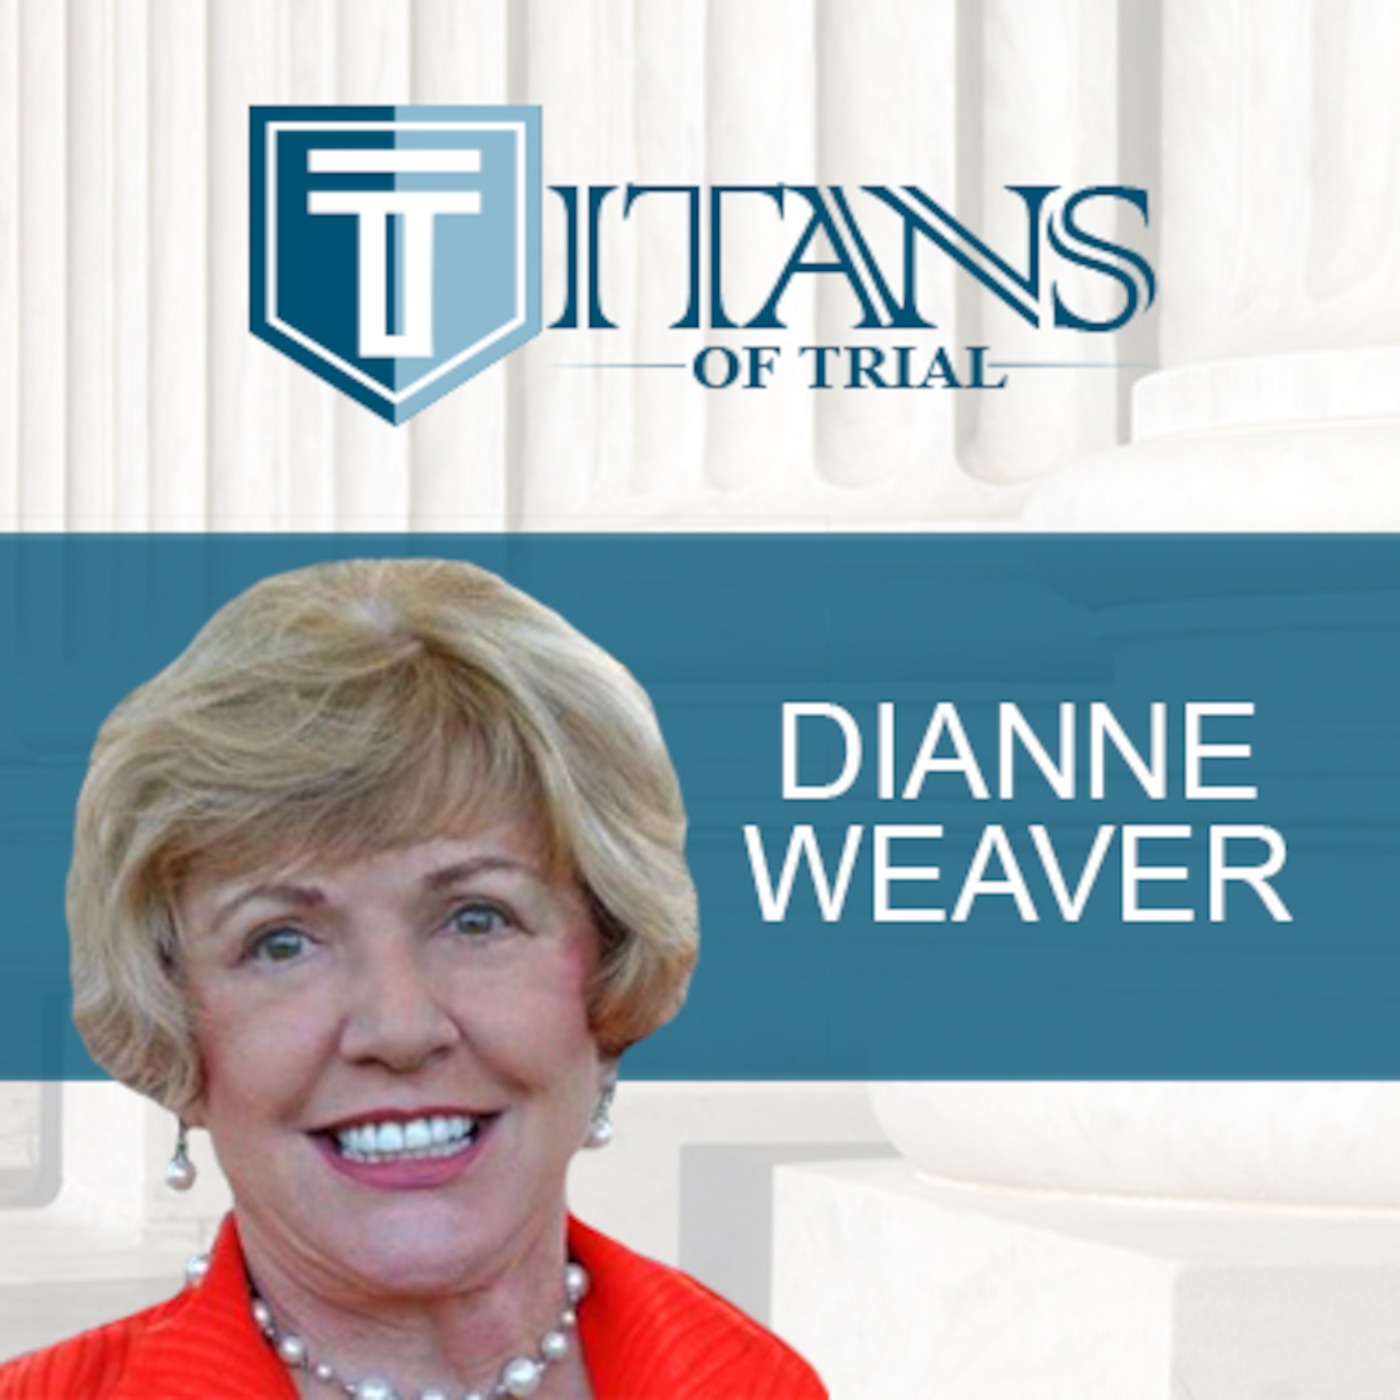 Titans of Trial - Dianne Weaver